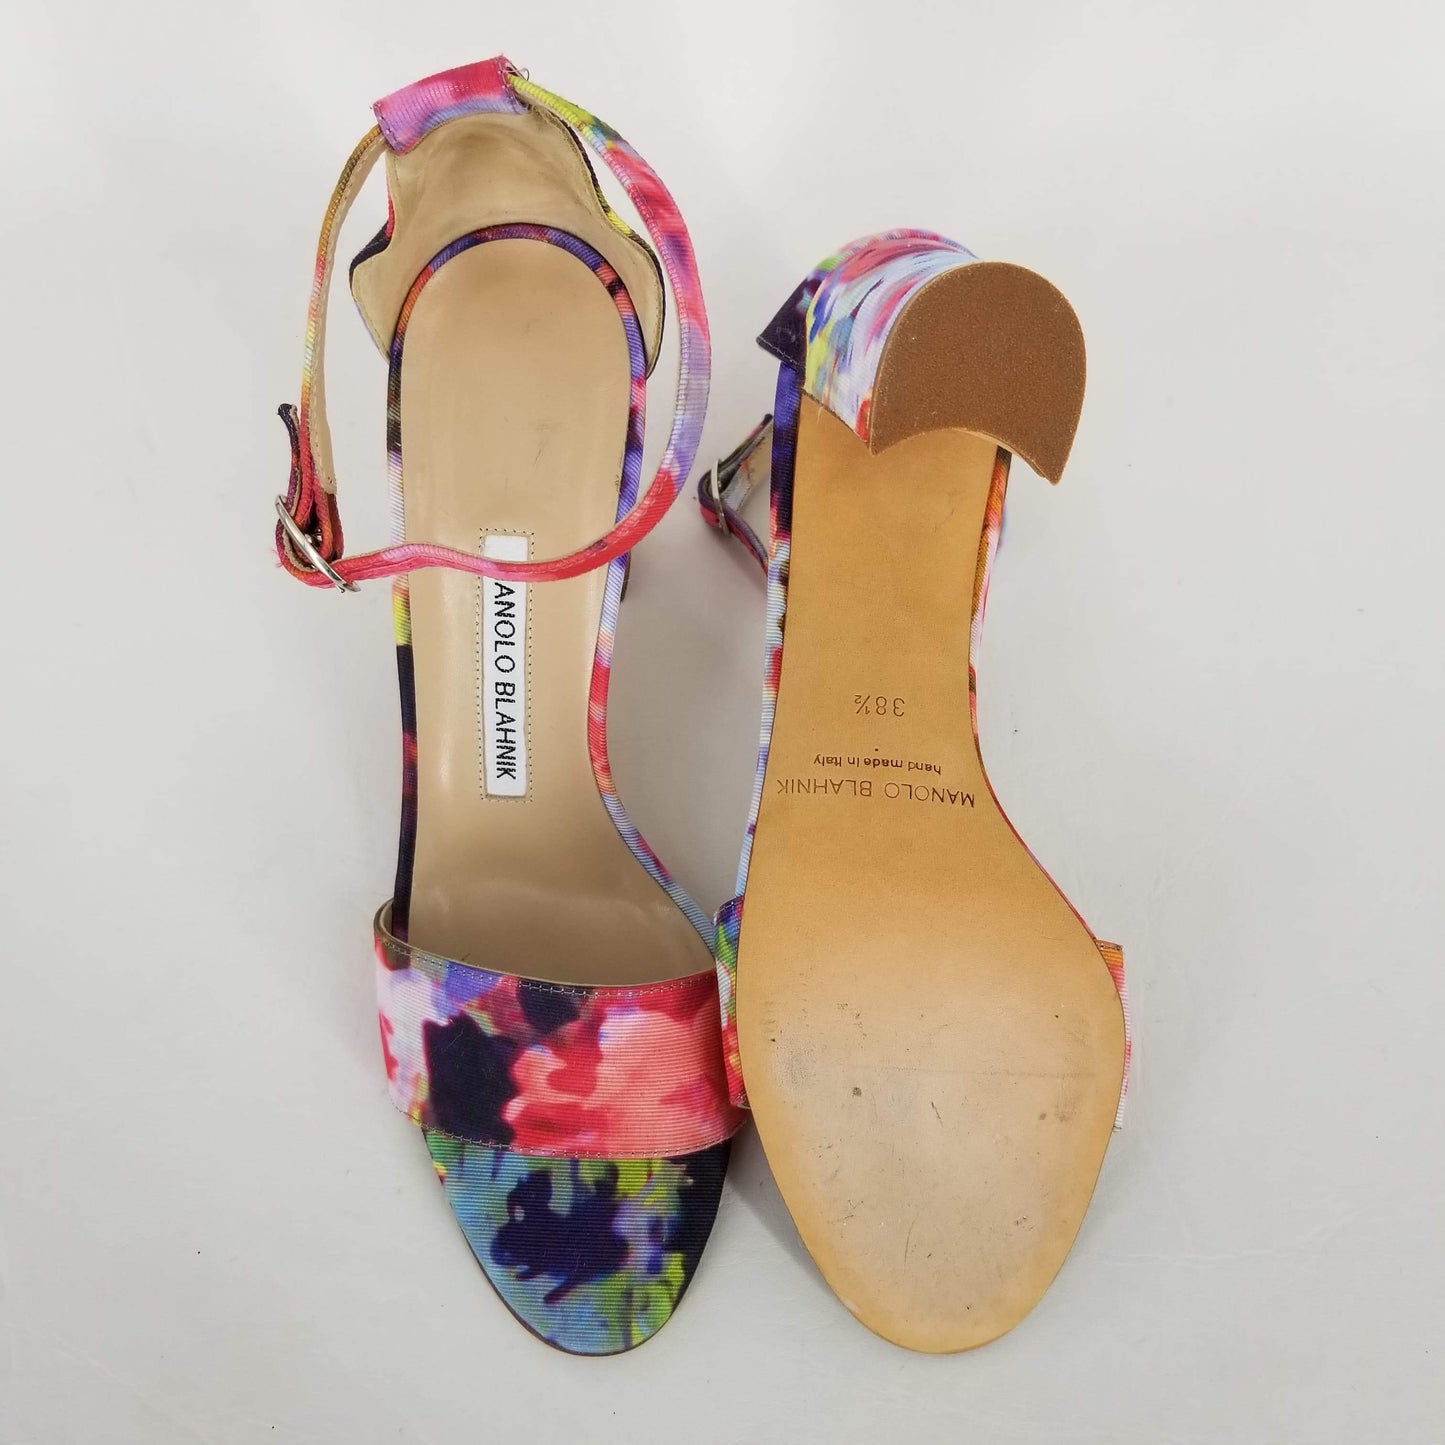 Authentic Manolo Blahnik Lauratopri Floral Fabric Chunky Heel Pumps Women's 39 / 8.5